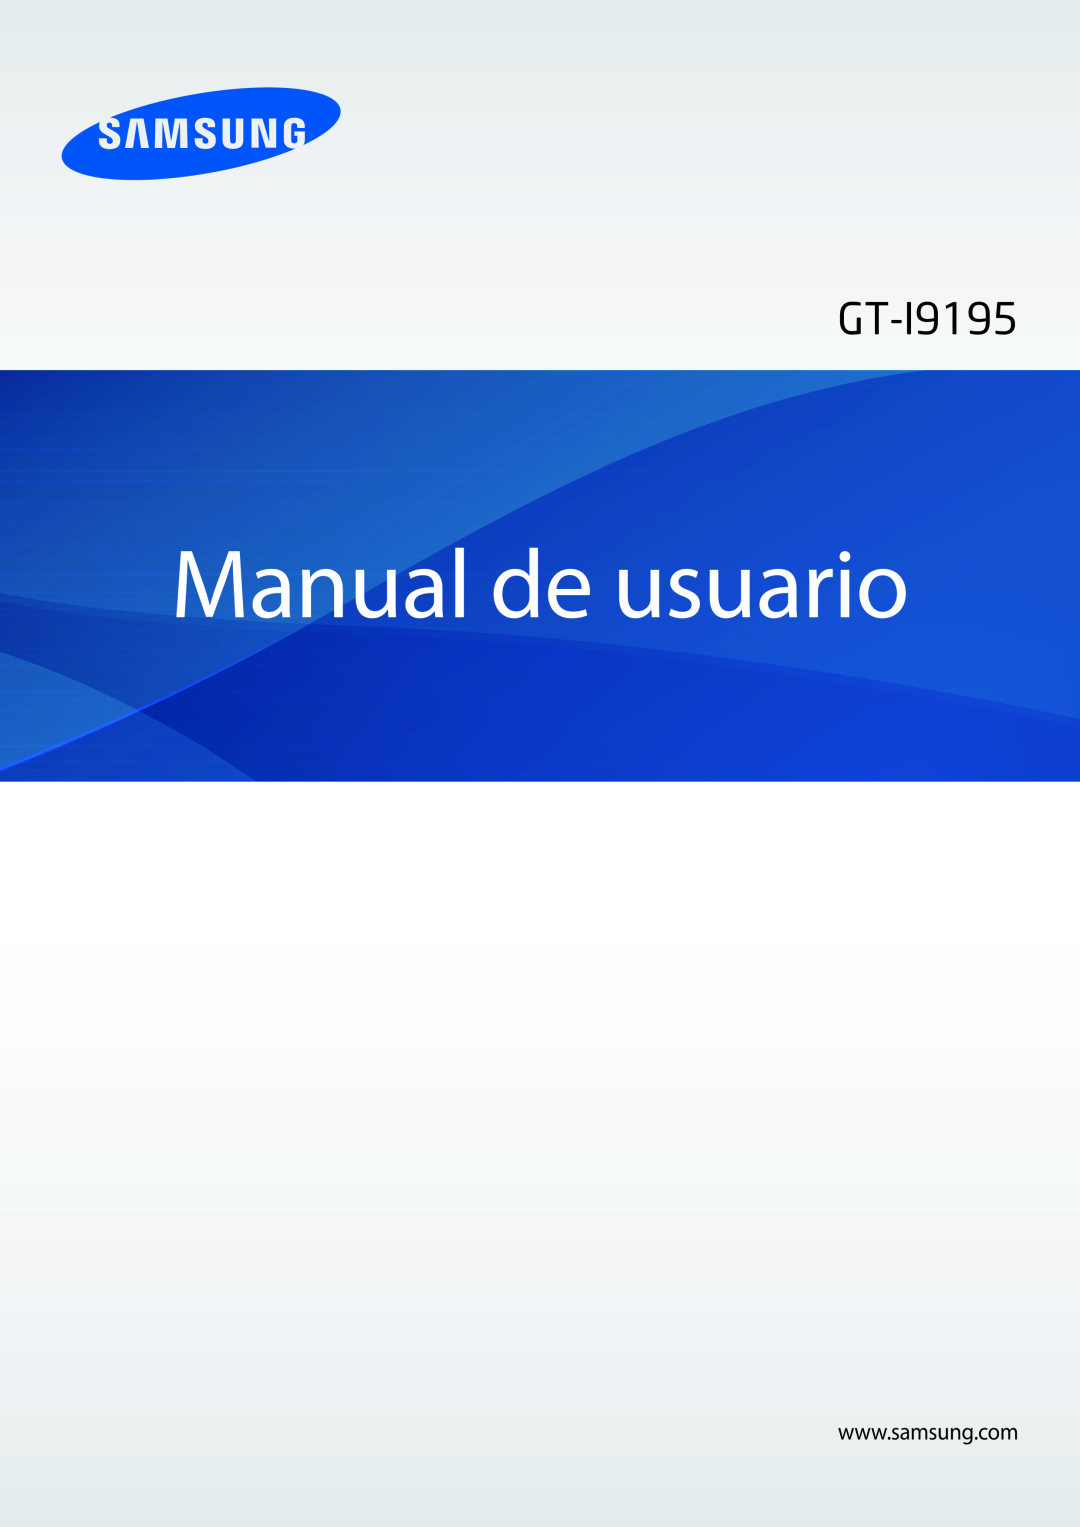 Samsung GT-I9195ZKAMEO, GT-I9195ZKADBT, GT-I9195ZKAATO, GT-I9195ZWAXEO, GT-I9195DKYXEO manual Manual de usuario 